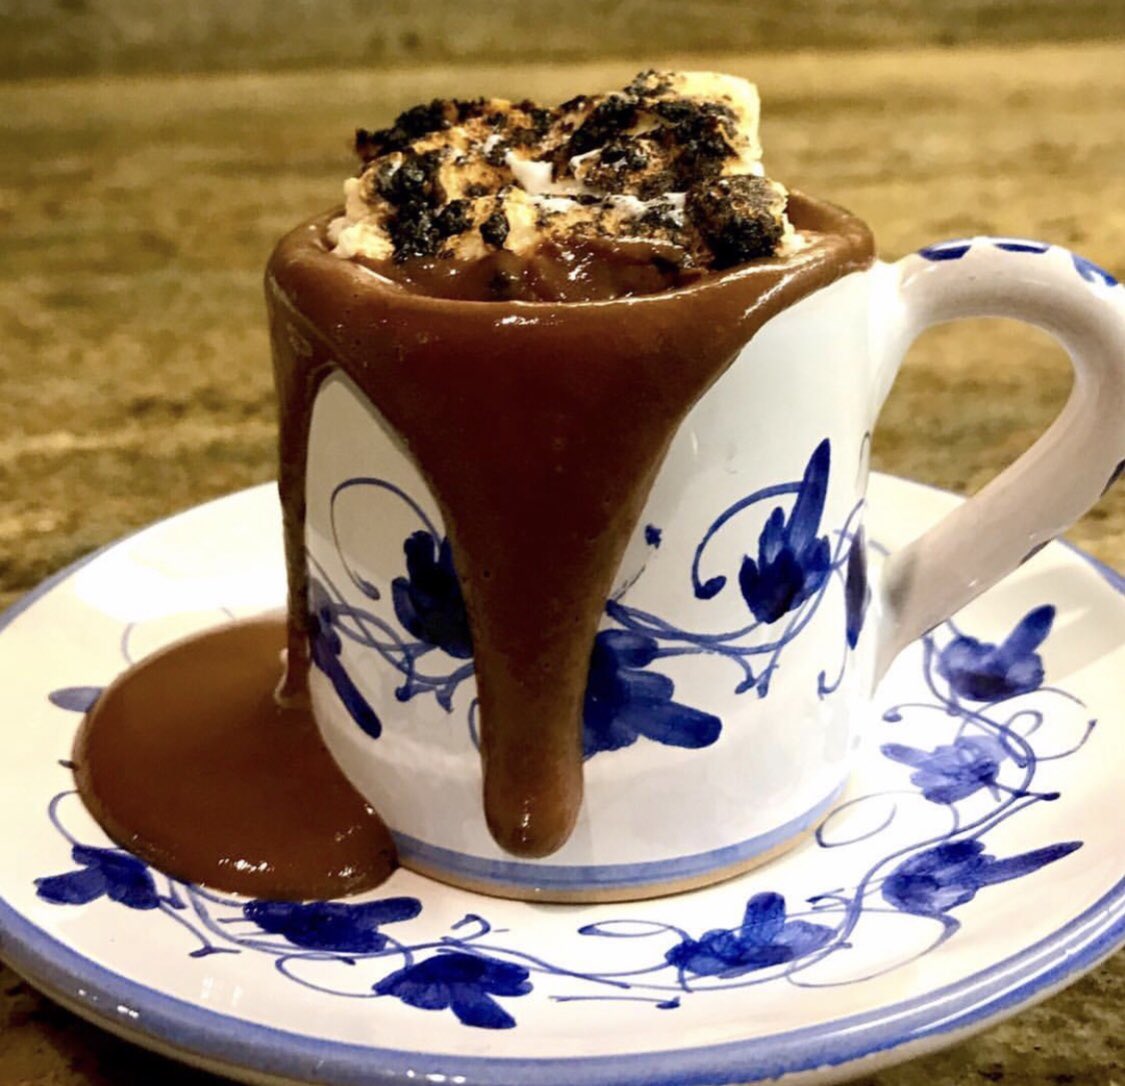 Entering the #drinkingchocolate @ChocolateSalon #cacao #darkchocolate #bellasophiachocolate burnt marshmallow Mmm